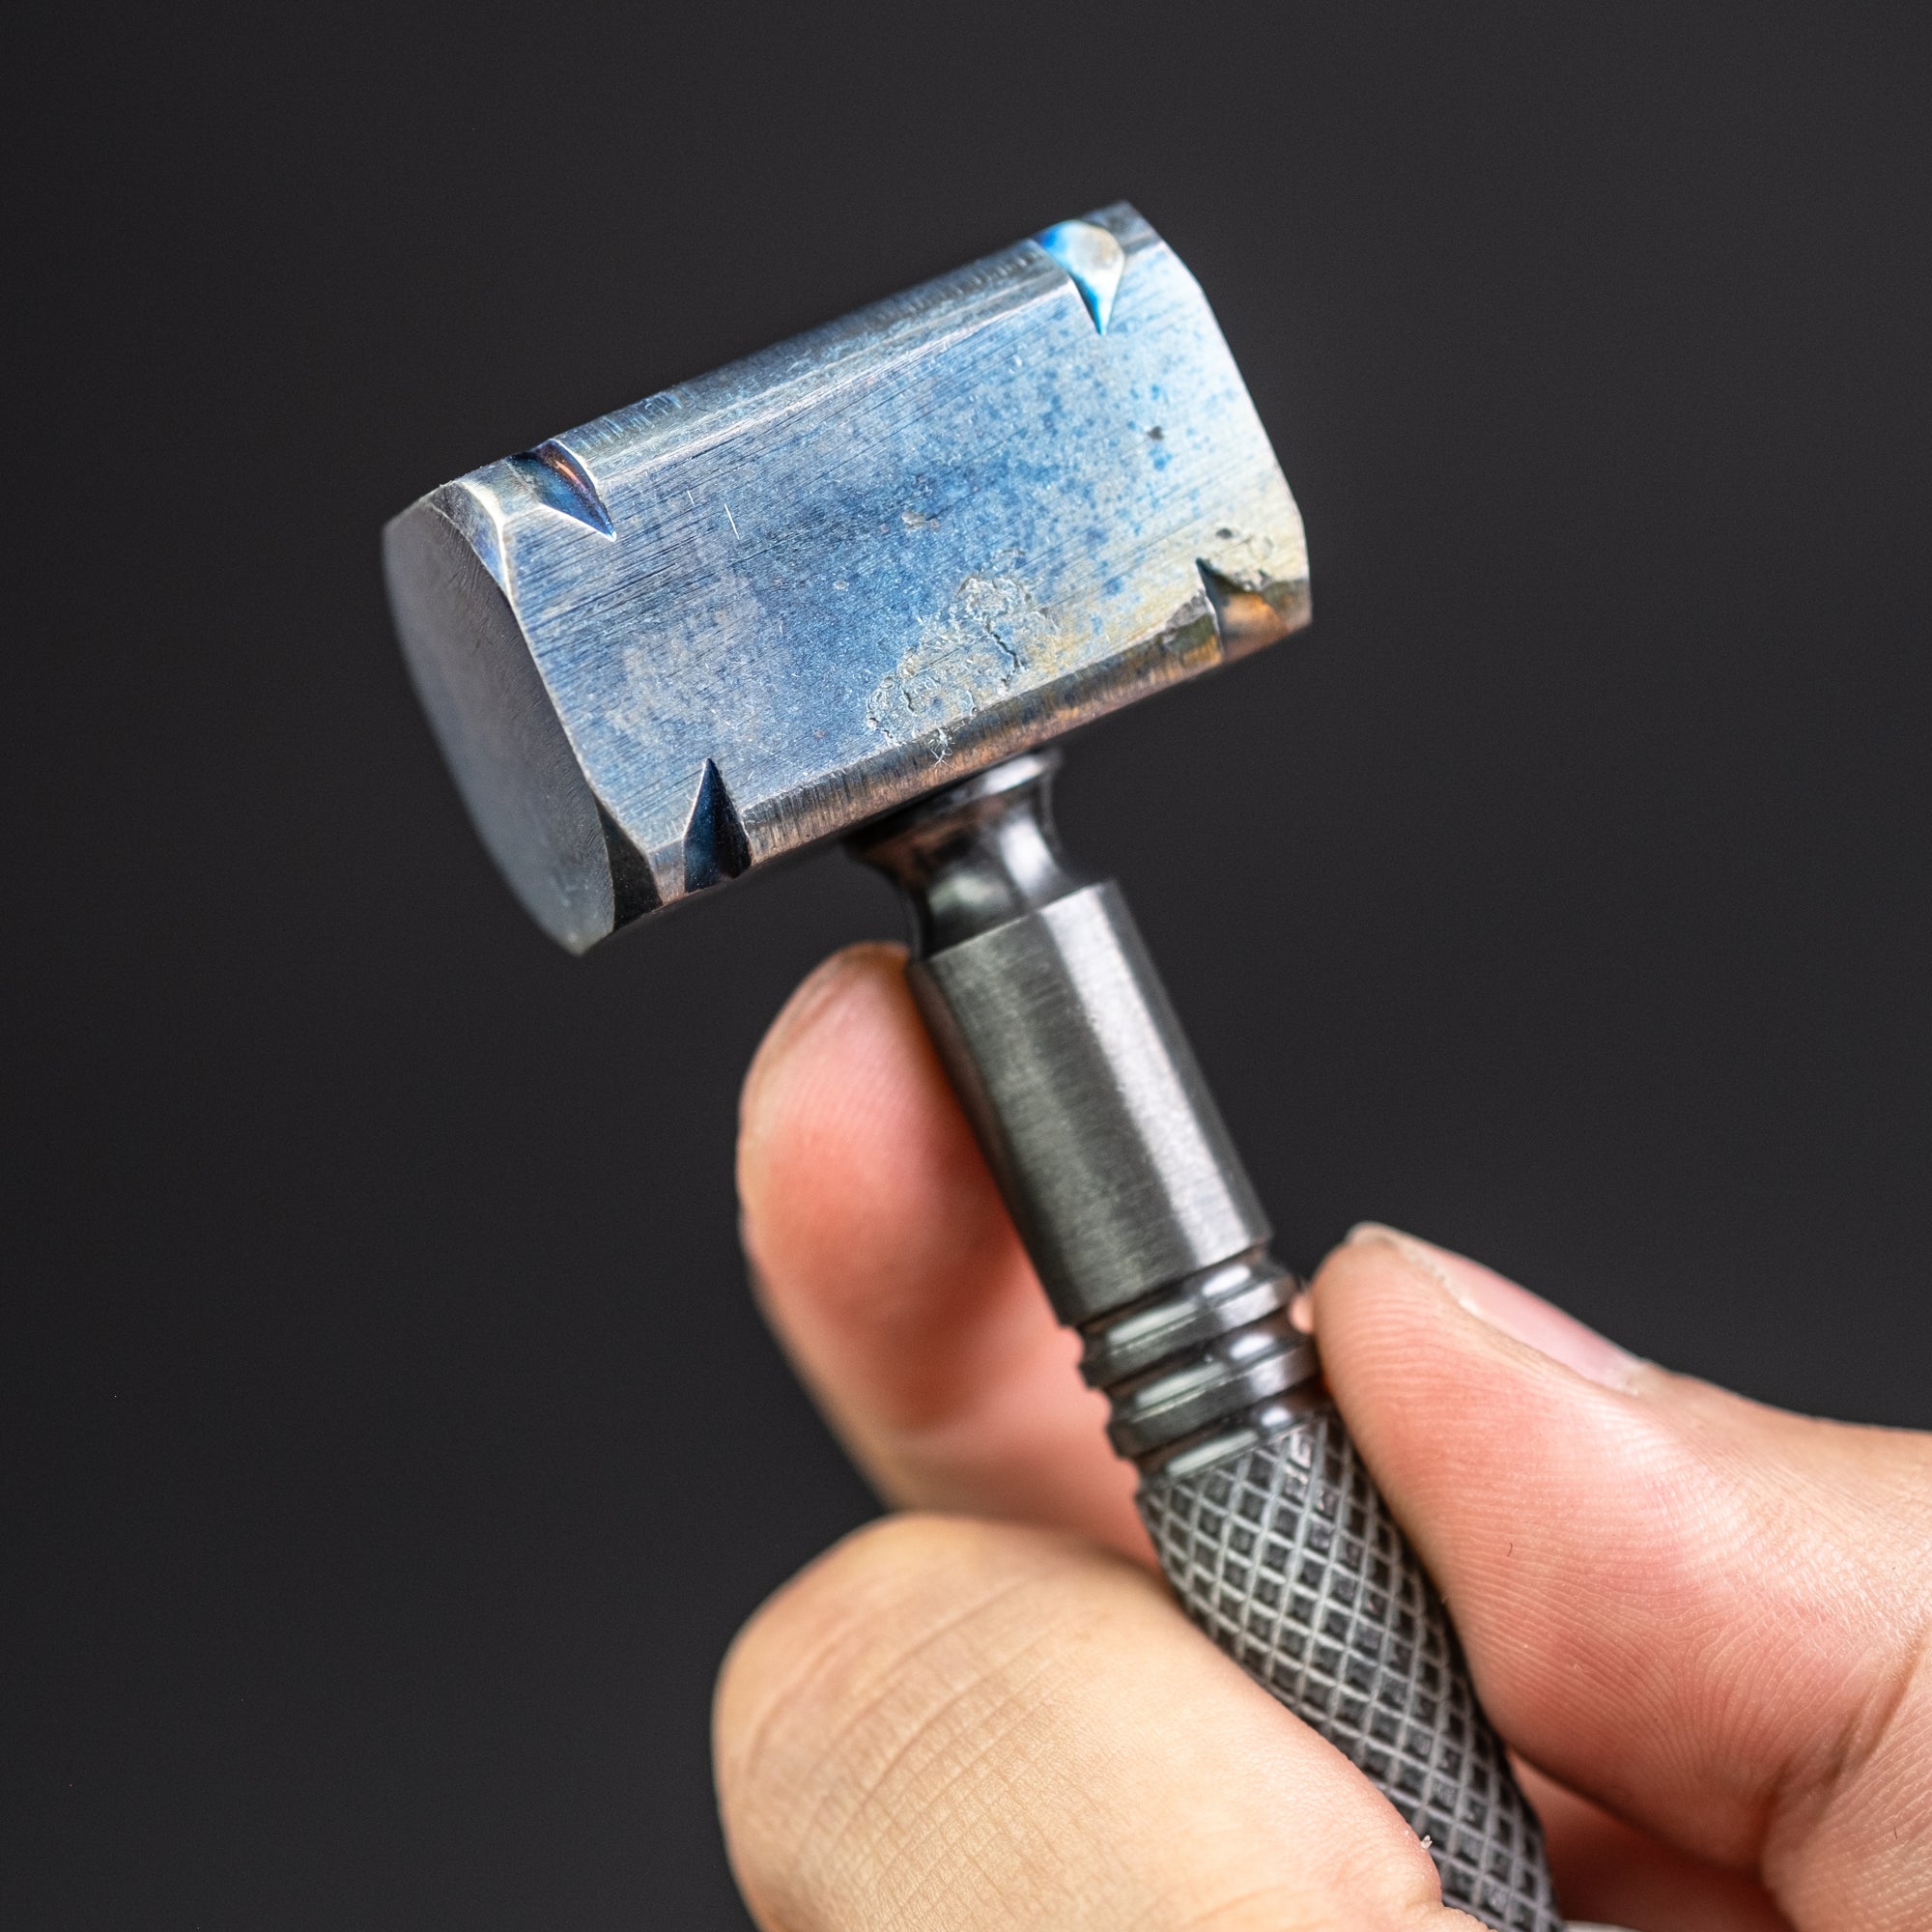 ModernBlacksmithUK Mini Hammer Keyring